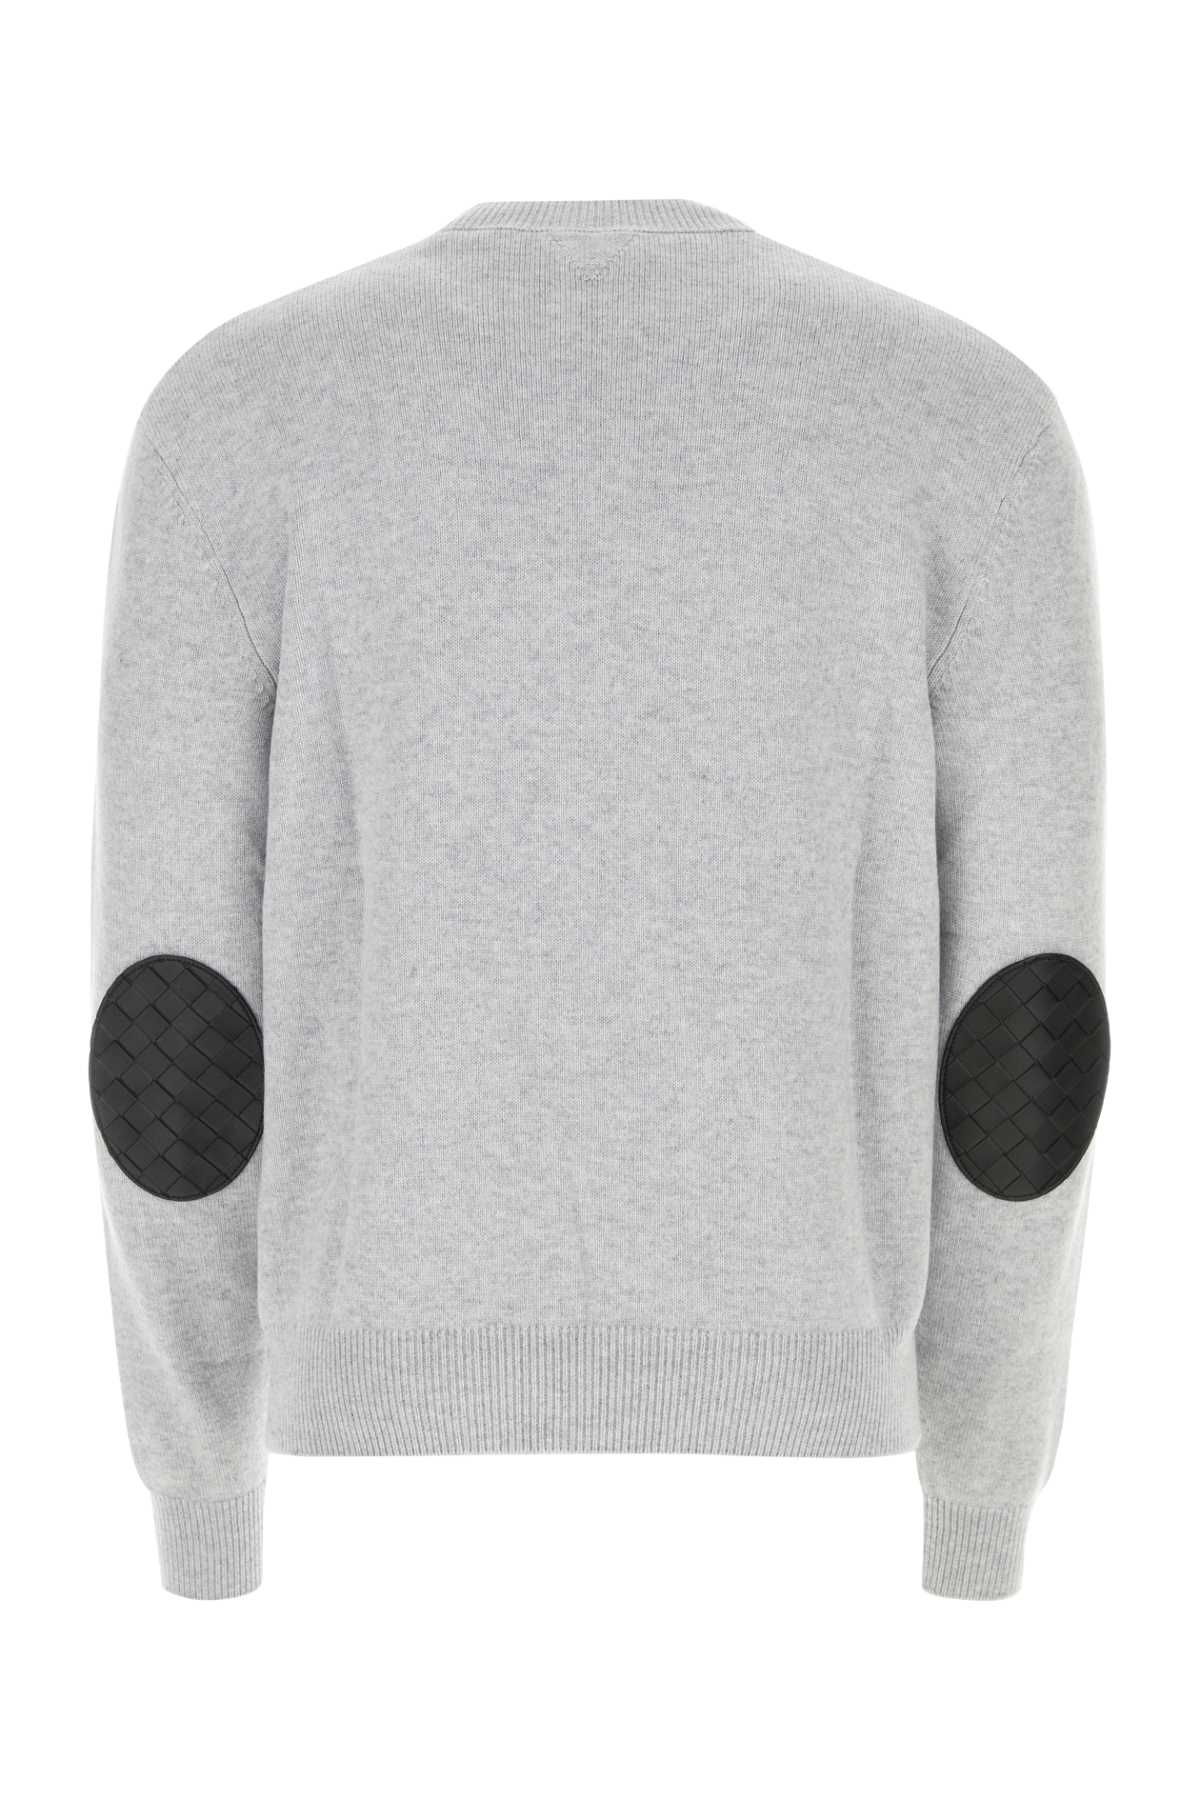 Bottega Veneta Melange Grey Stretch Cashmere Blend Sweater